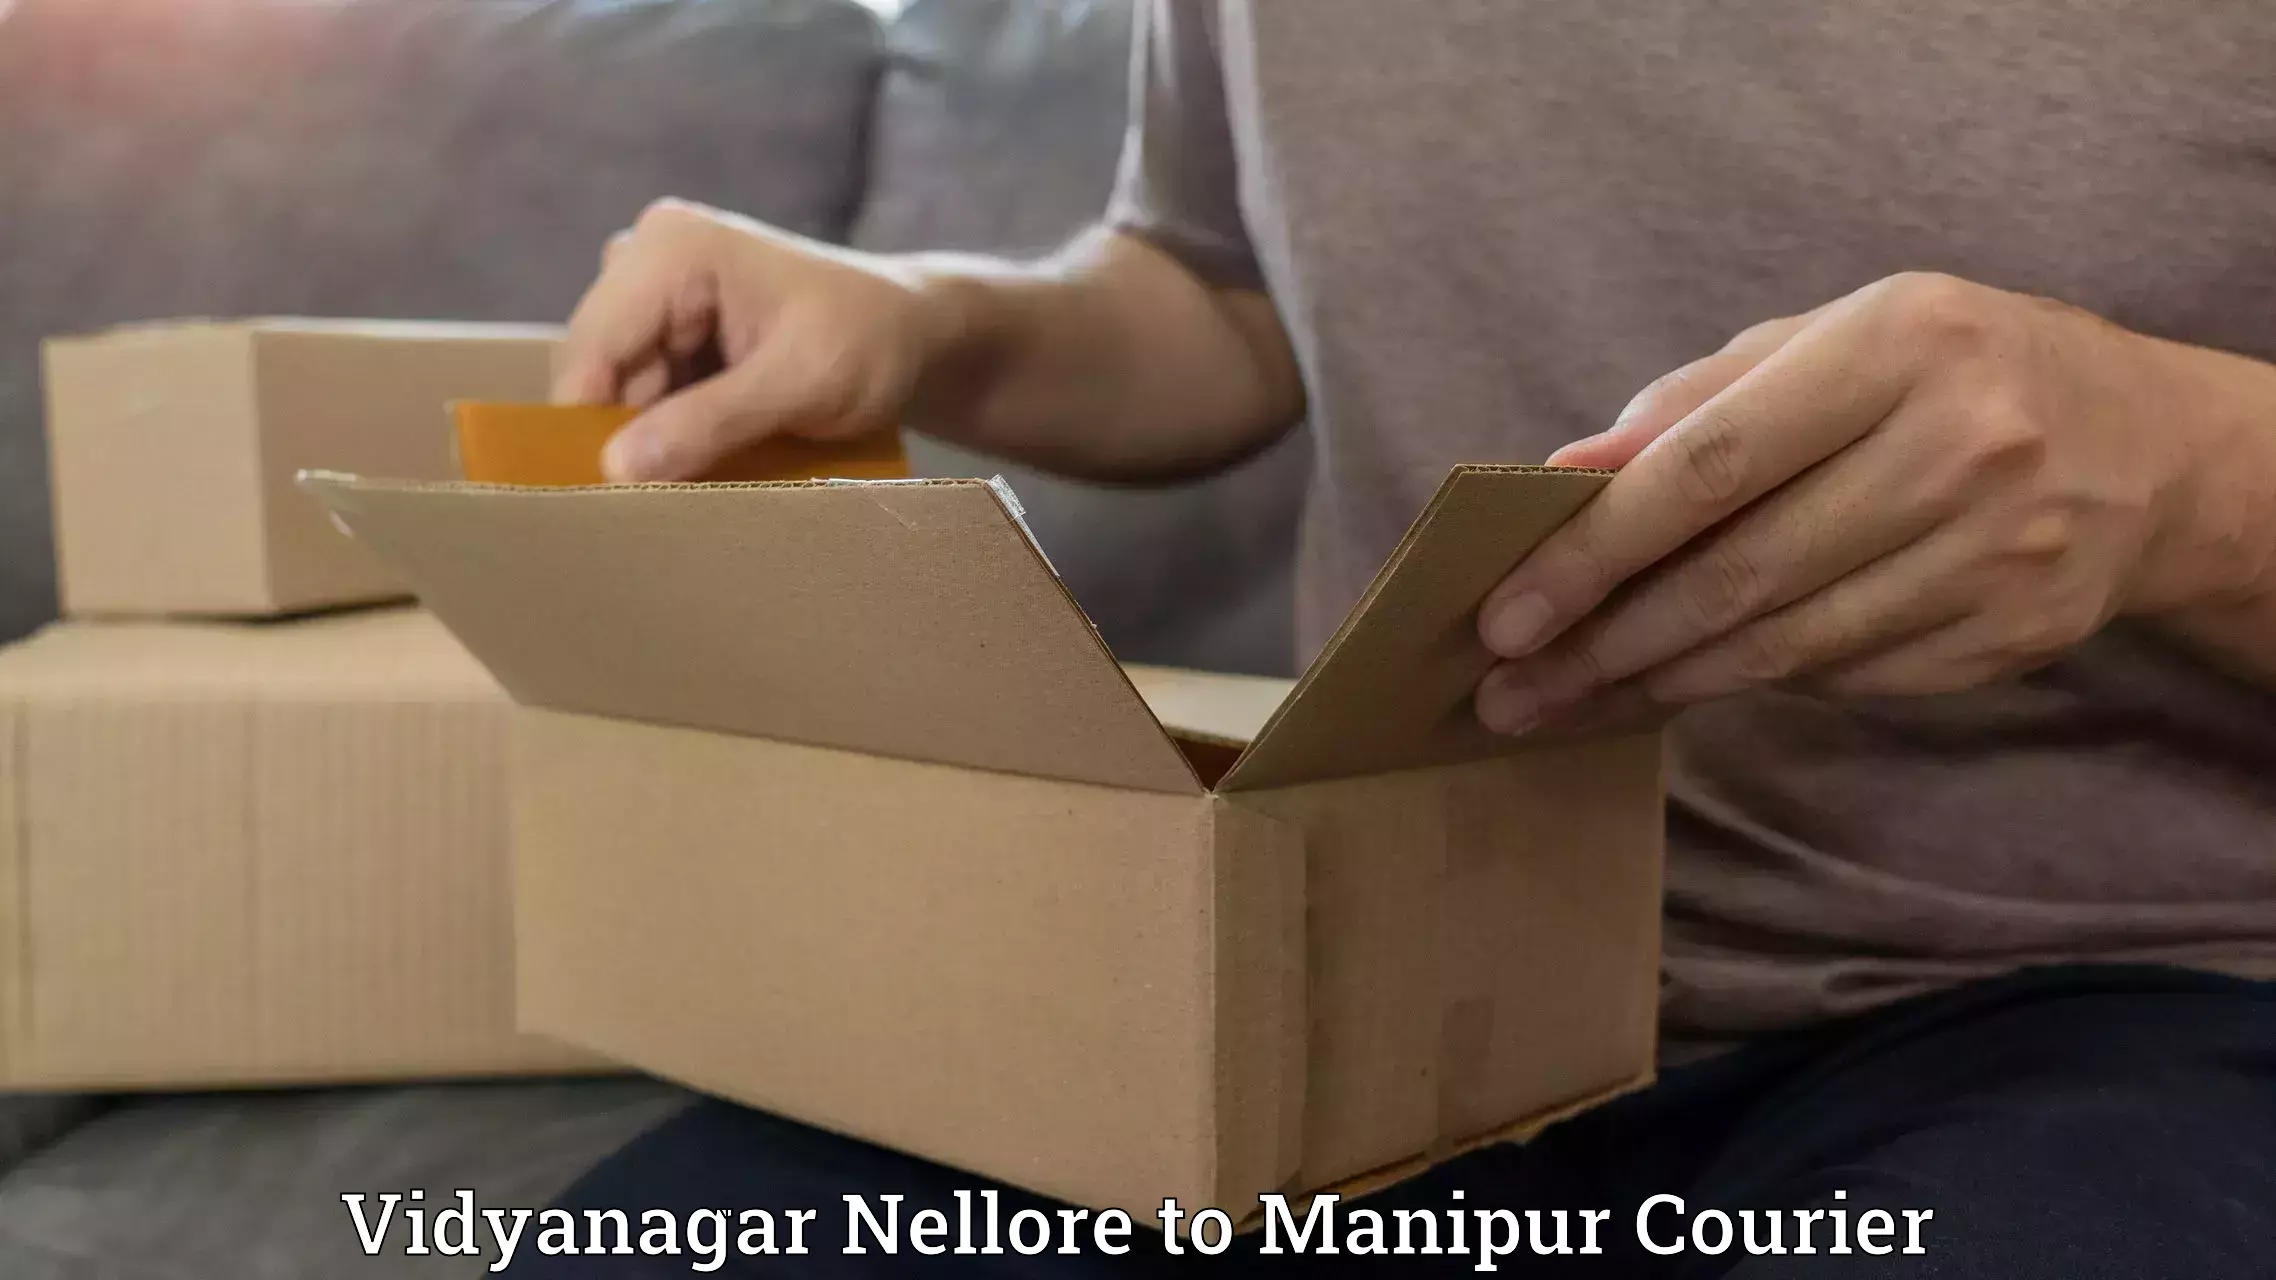 Global courier networks Vidyanagar Nellore to Manipur